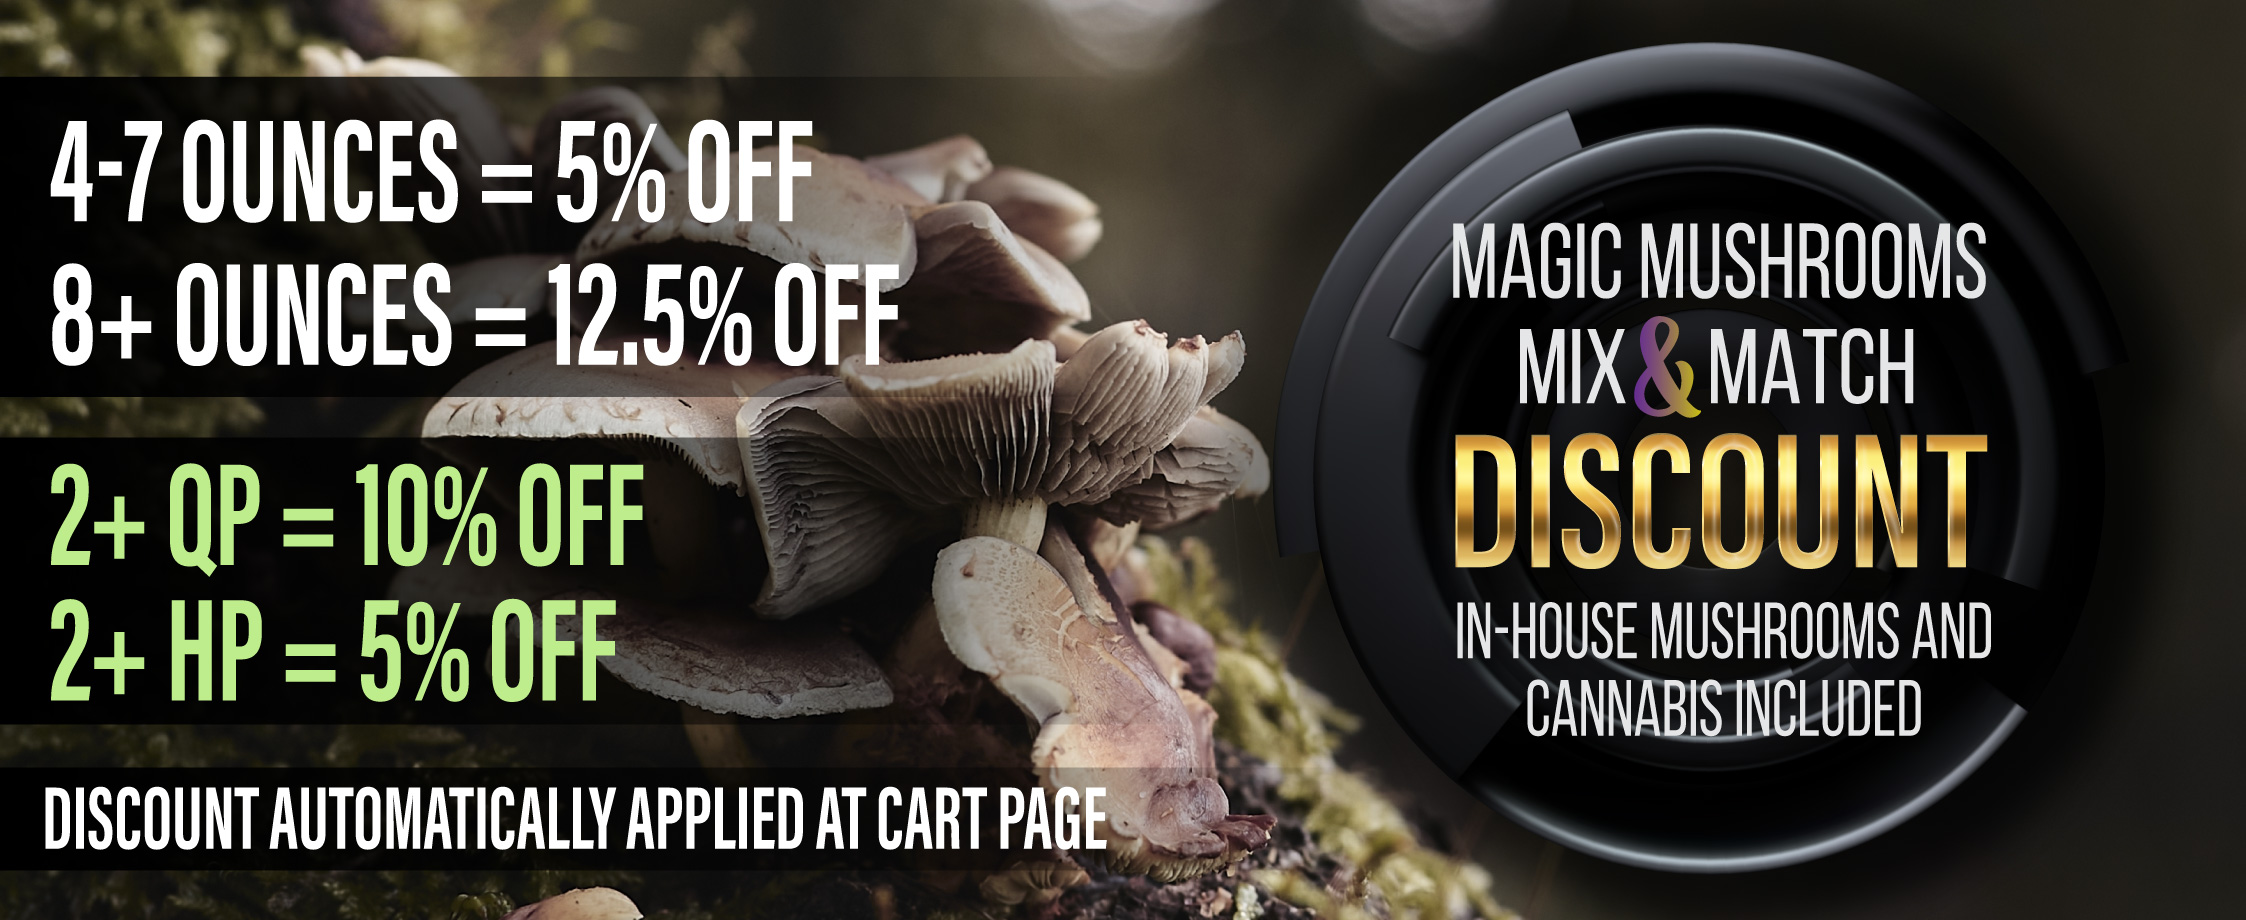 Buy Magic Mushrooms Online | Buy Psychedelic Online | Dispensary Near Me